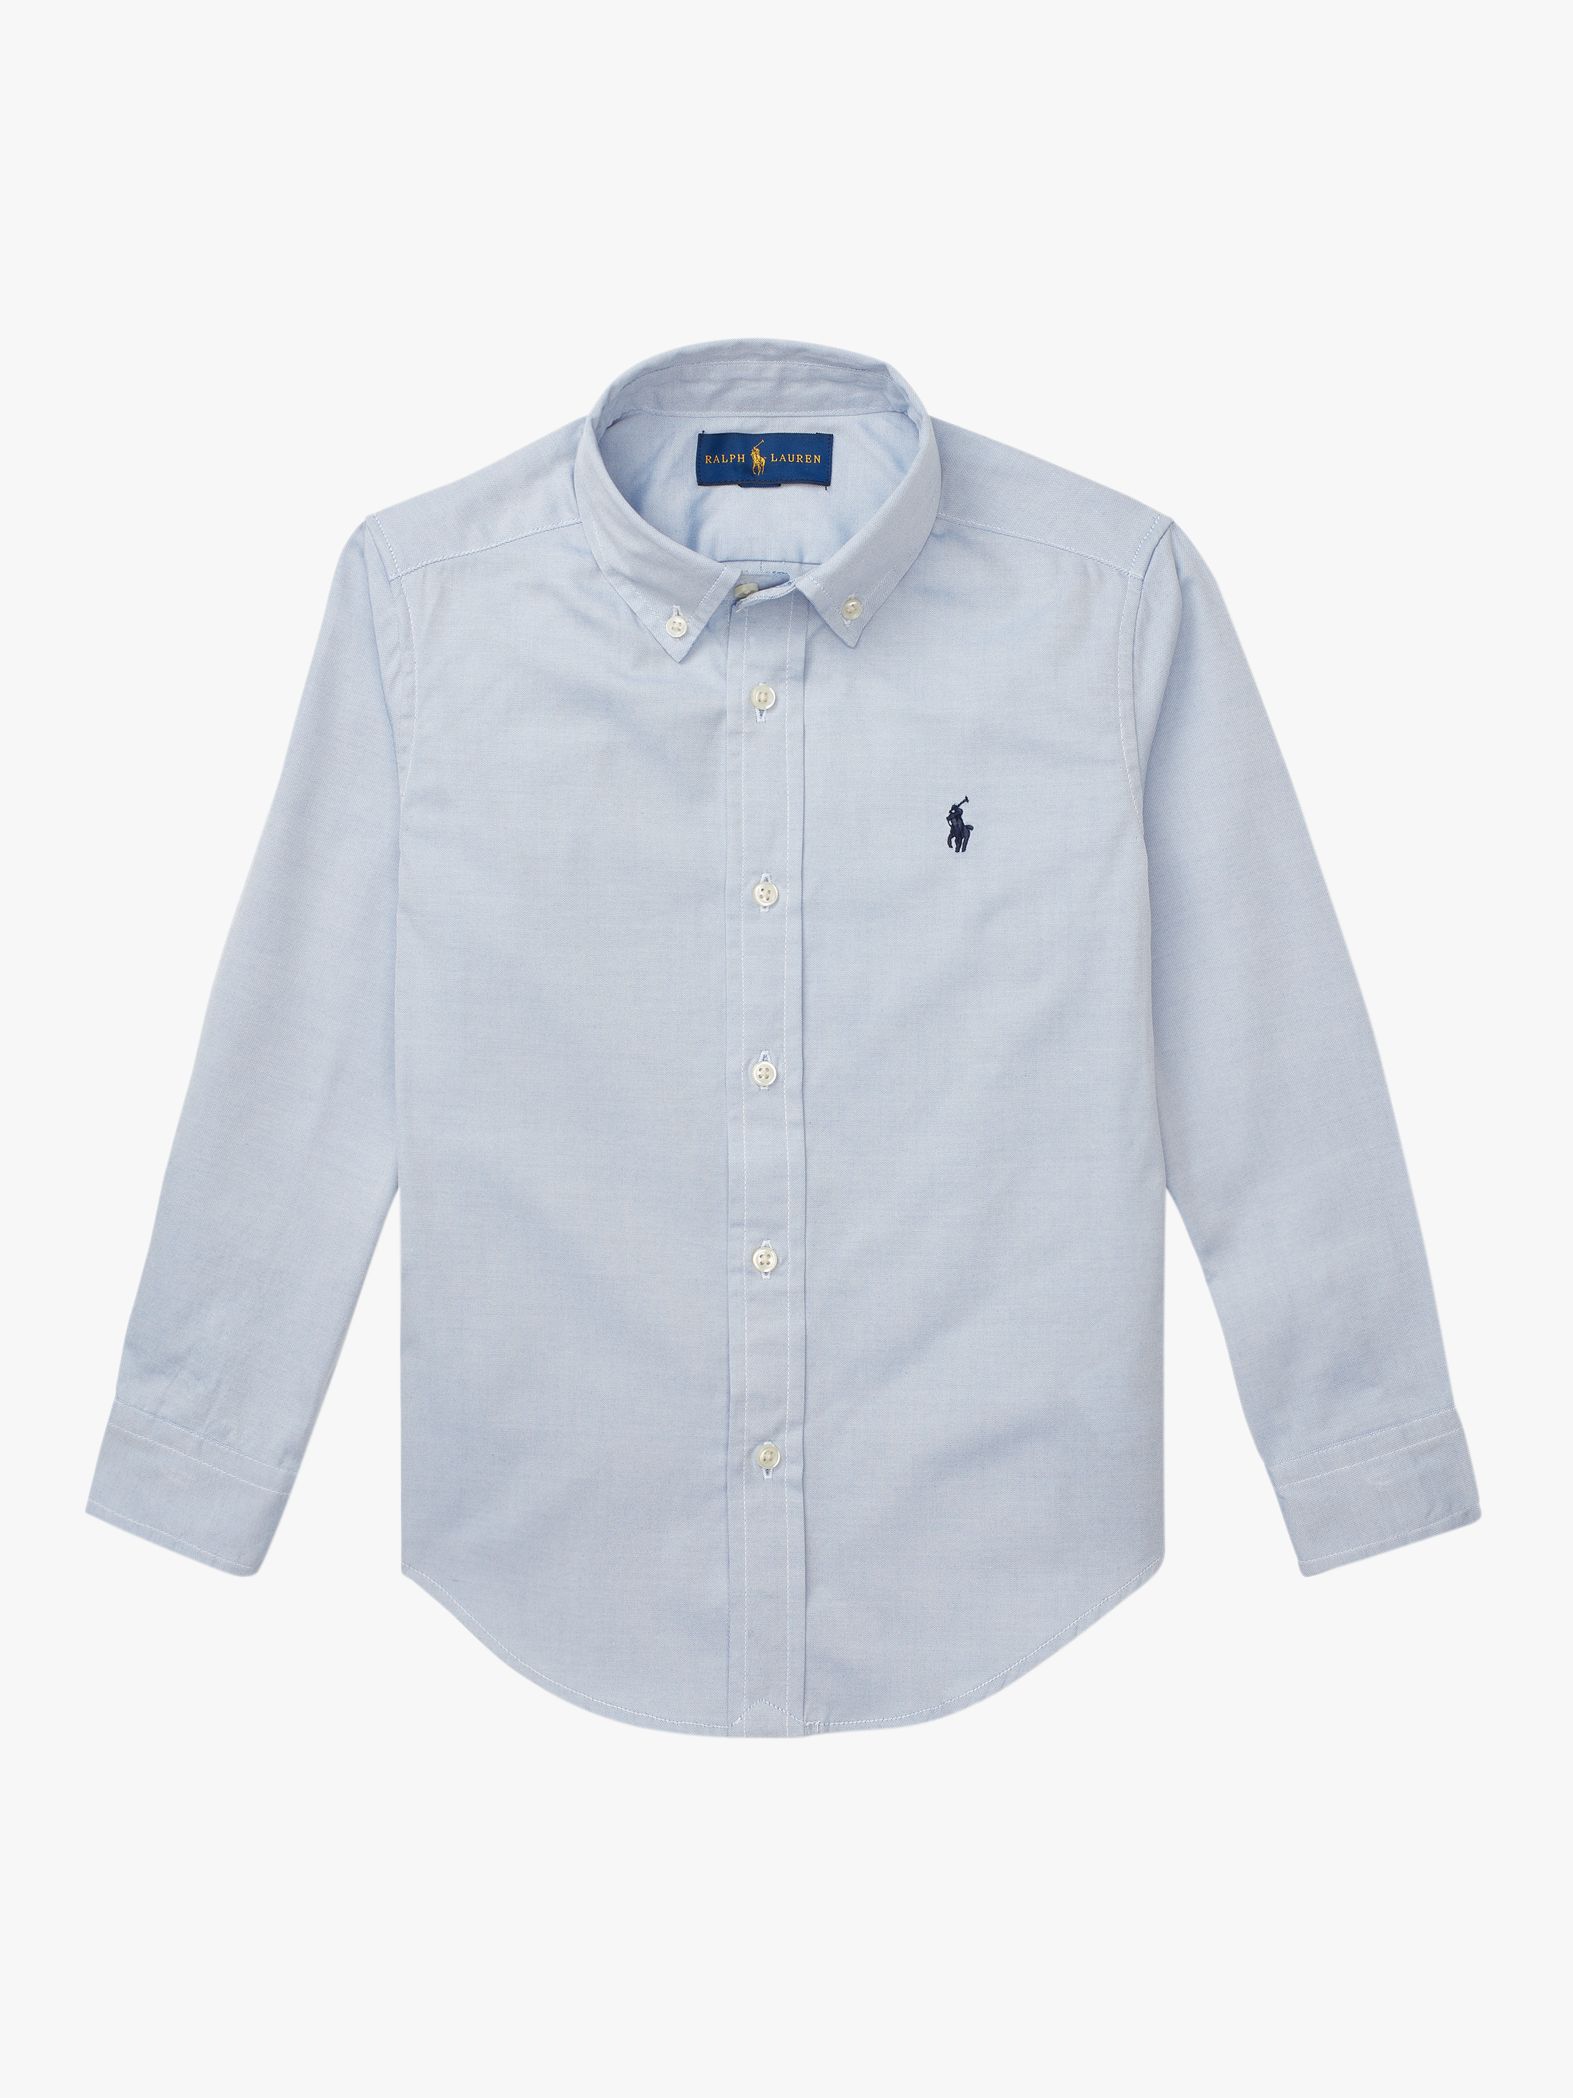 Image of Polo Ralph Lauren Boys Oxford Shirt Blue